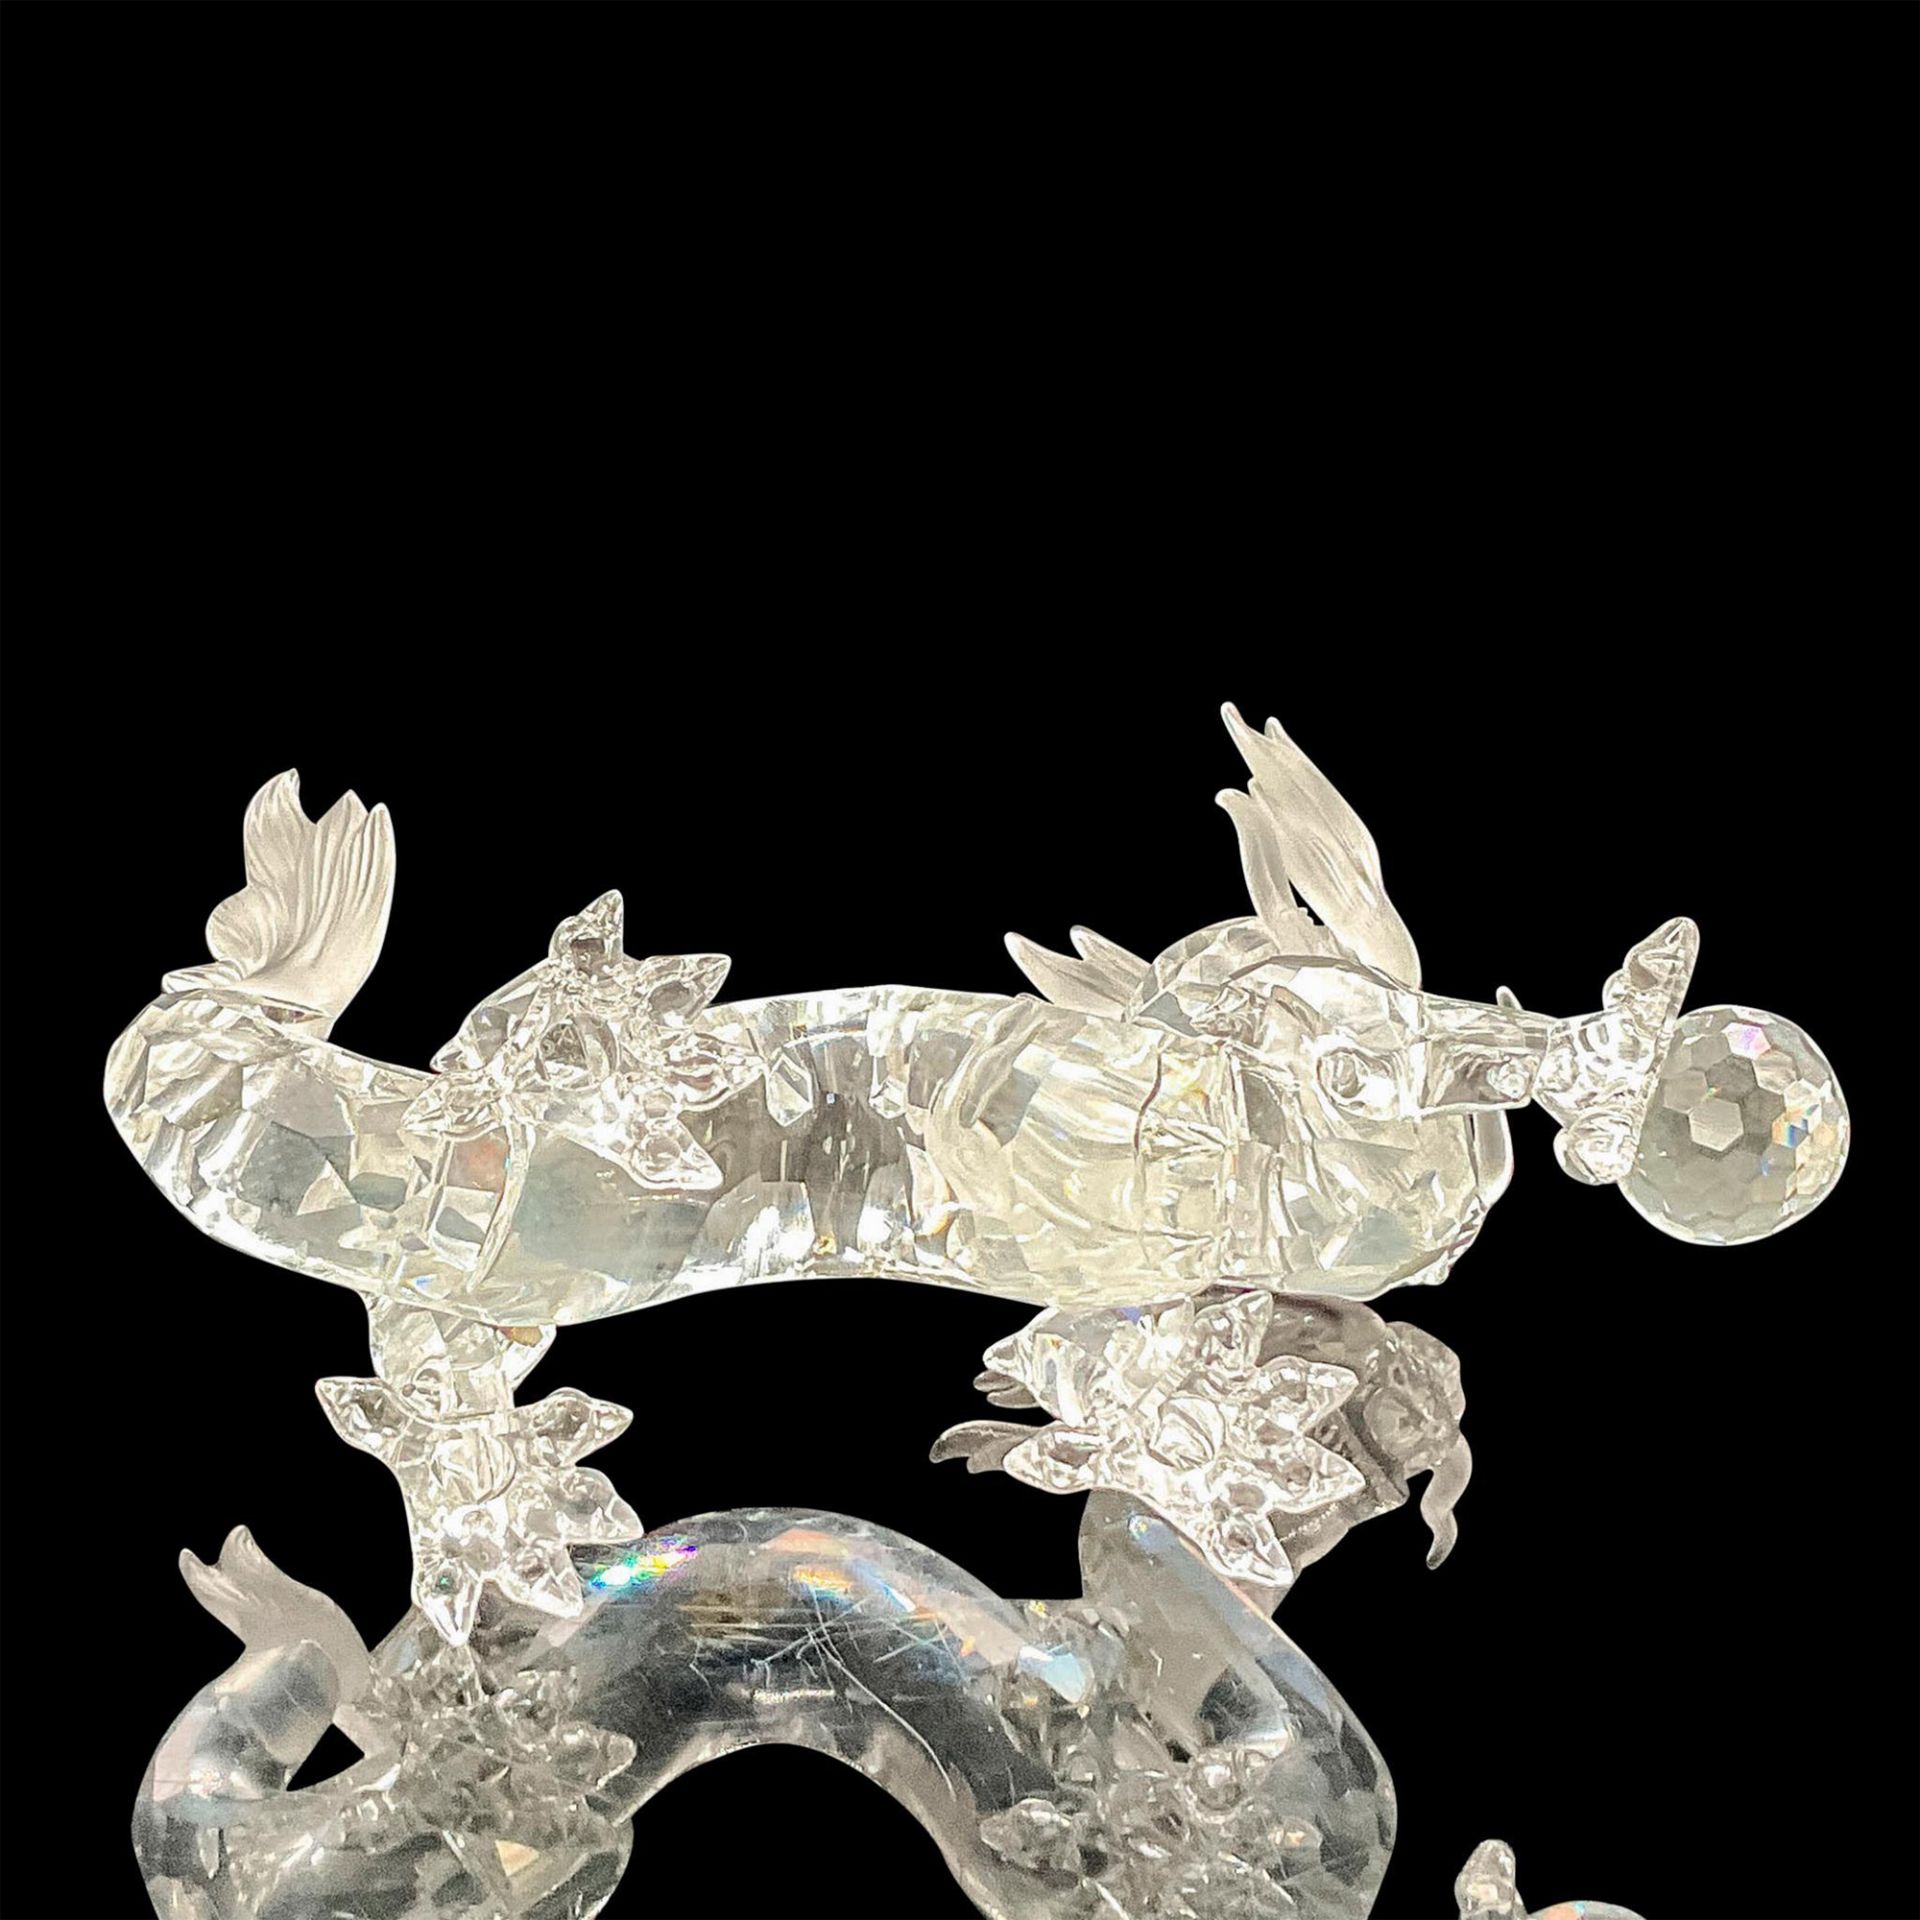 Swarovski Crystal Figurine, The Dragon - Image 3 of 5